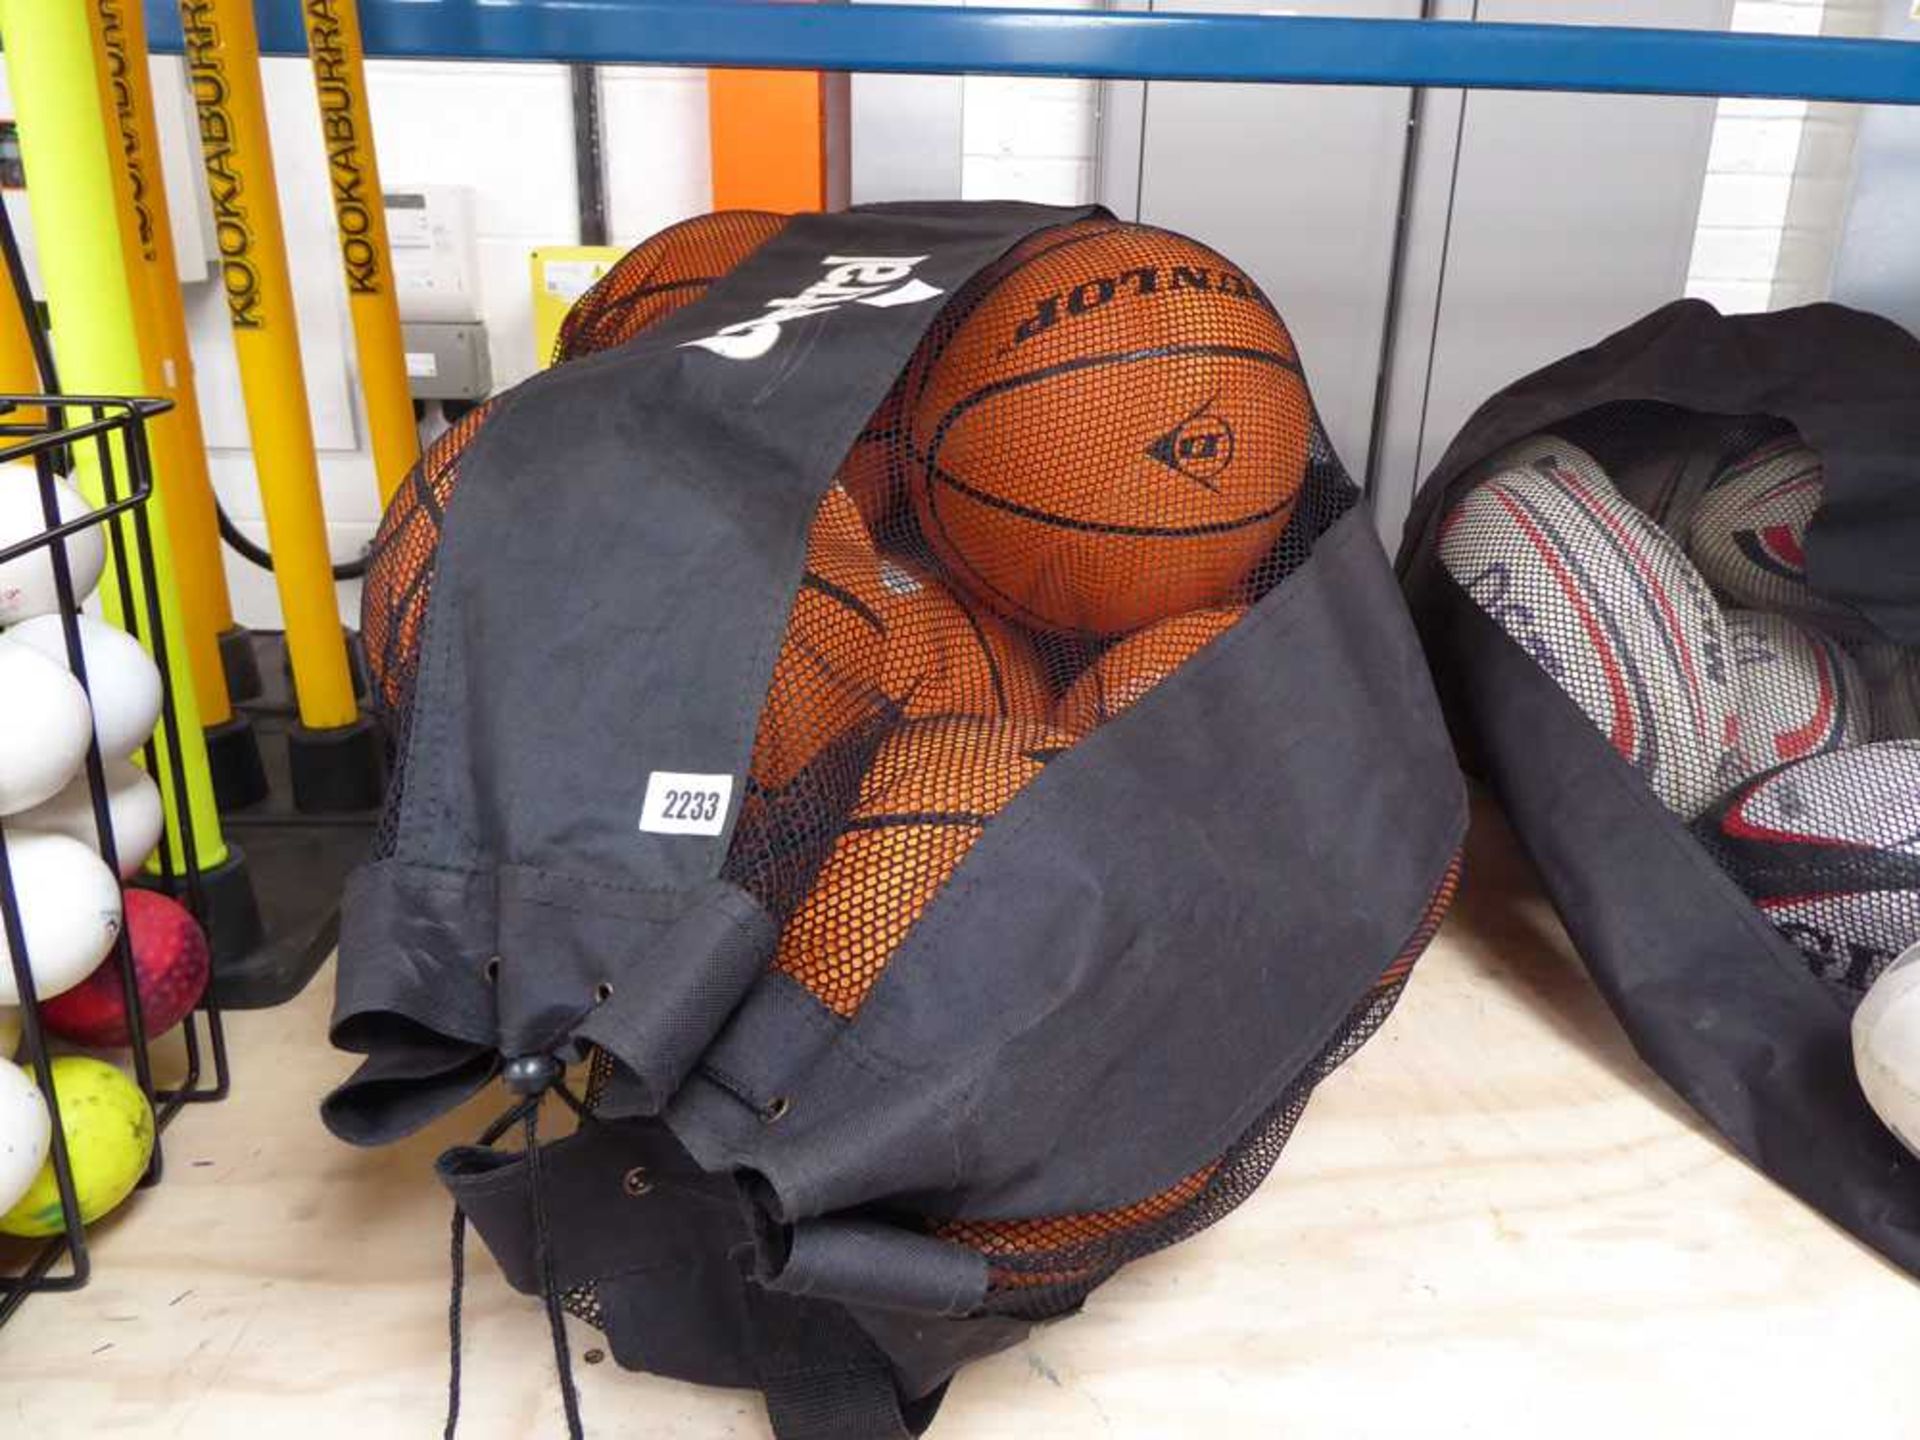 Bag containing approx. 10 Dunlop basketballs